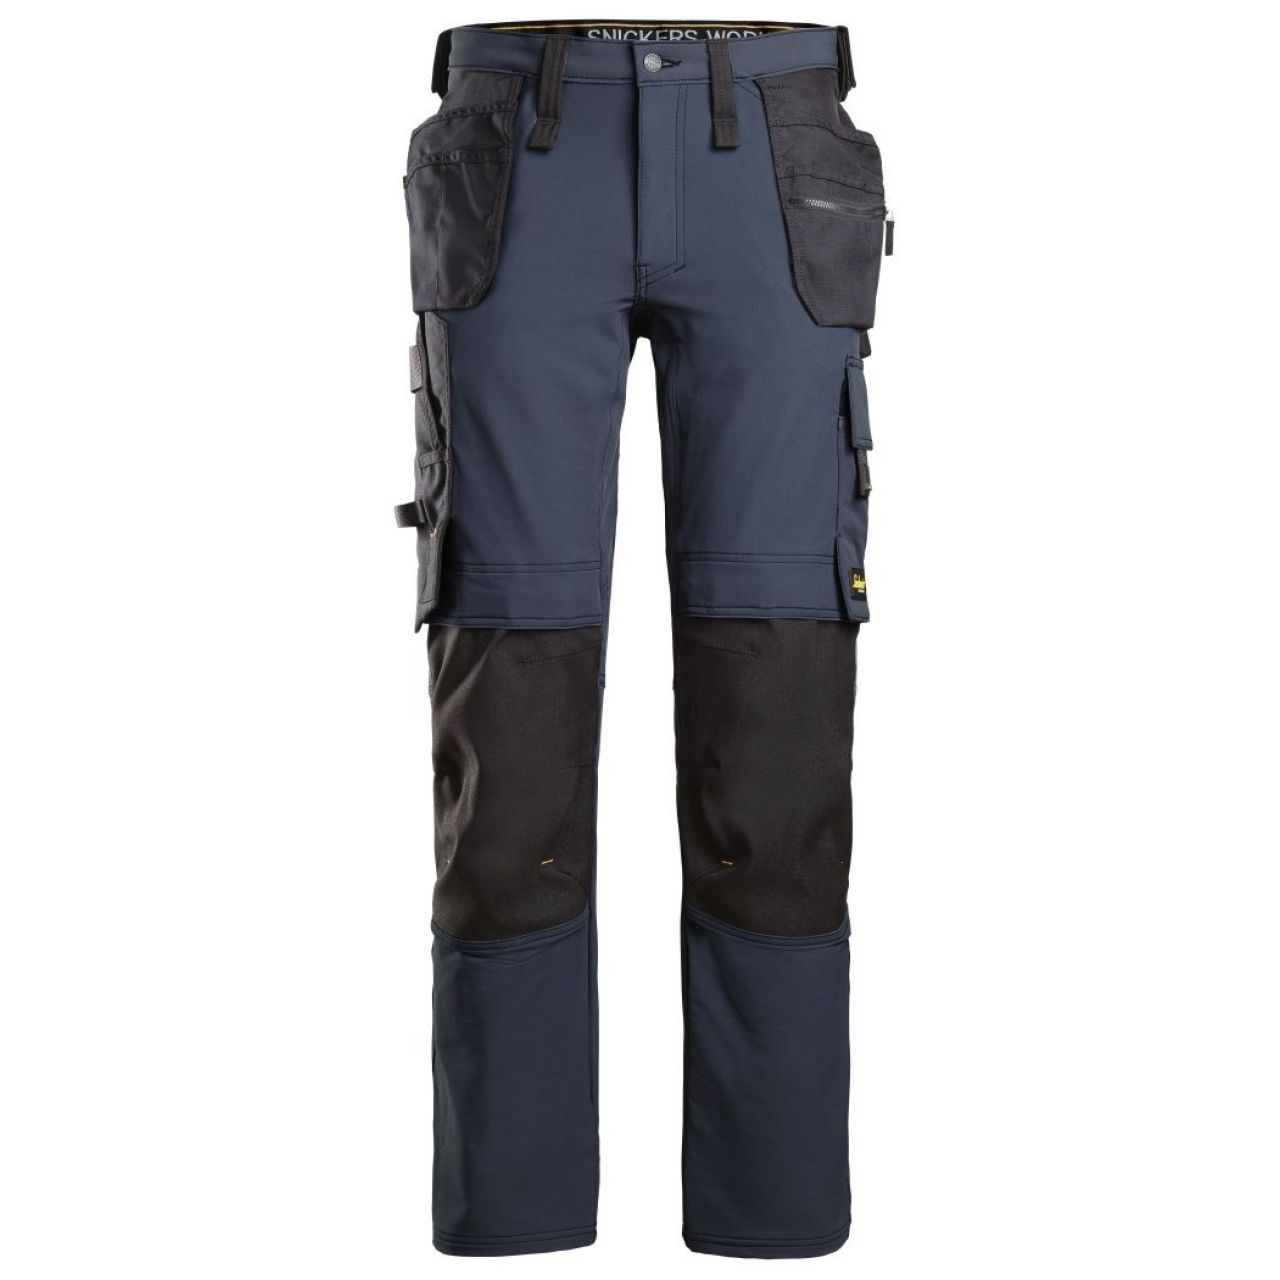 Pantalon elastico AllroundWork bolsillos flotantes azul marino-negro talla 096